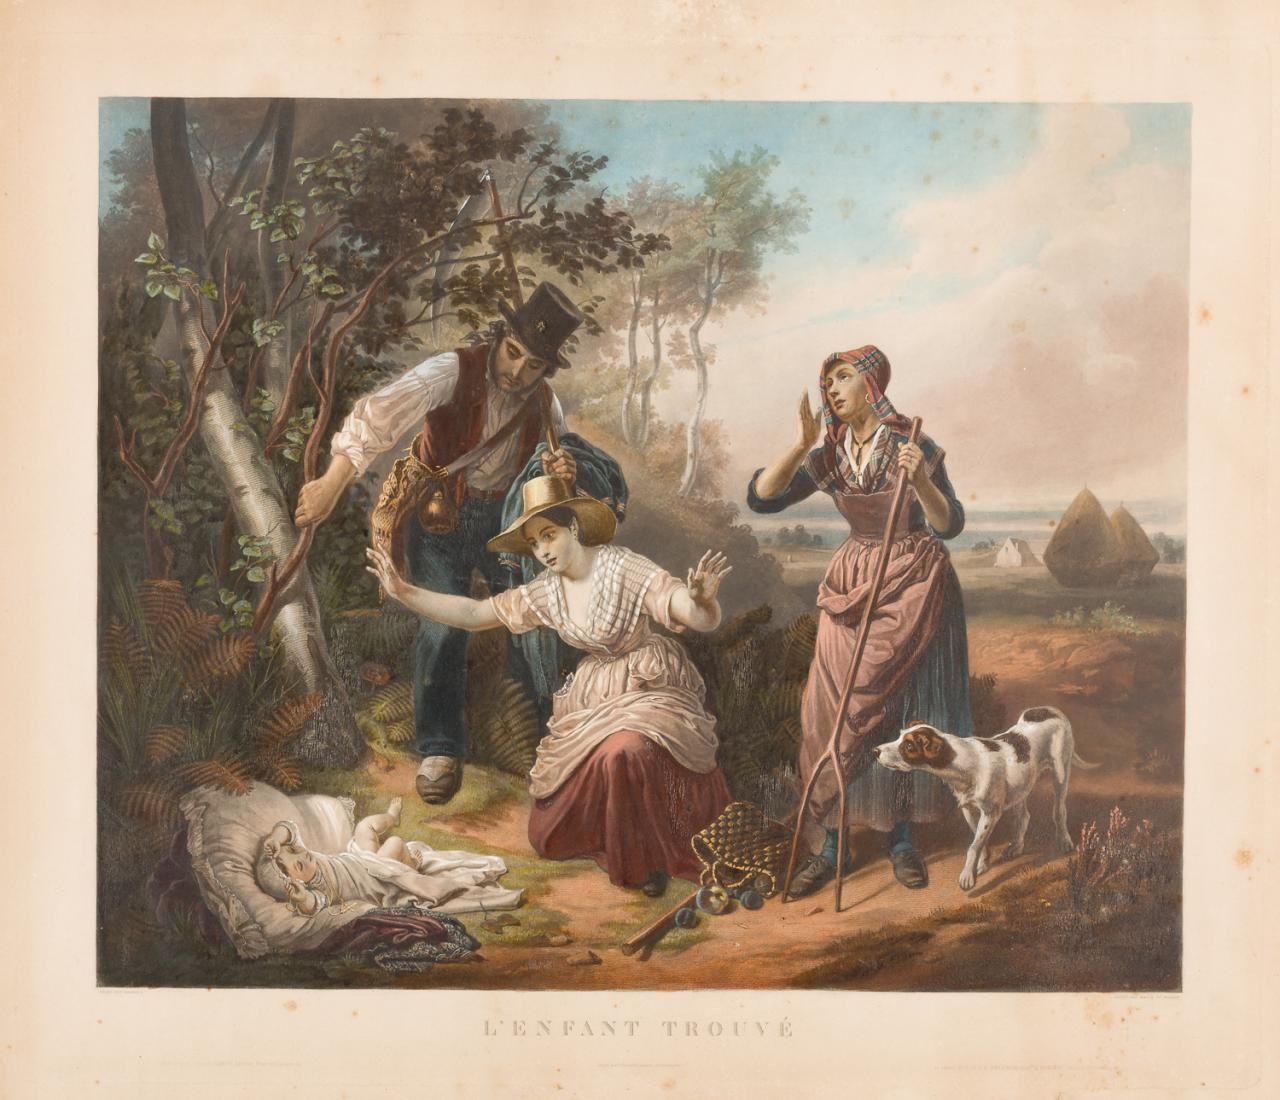 ESCUELA FRANCESA, S. XIX L´enfant trouvé
Litografía a color
60 x 70 cm